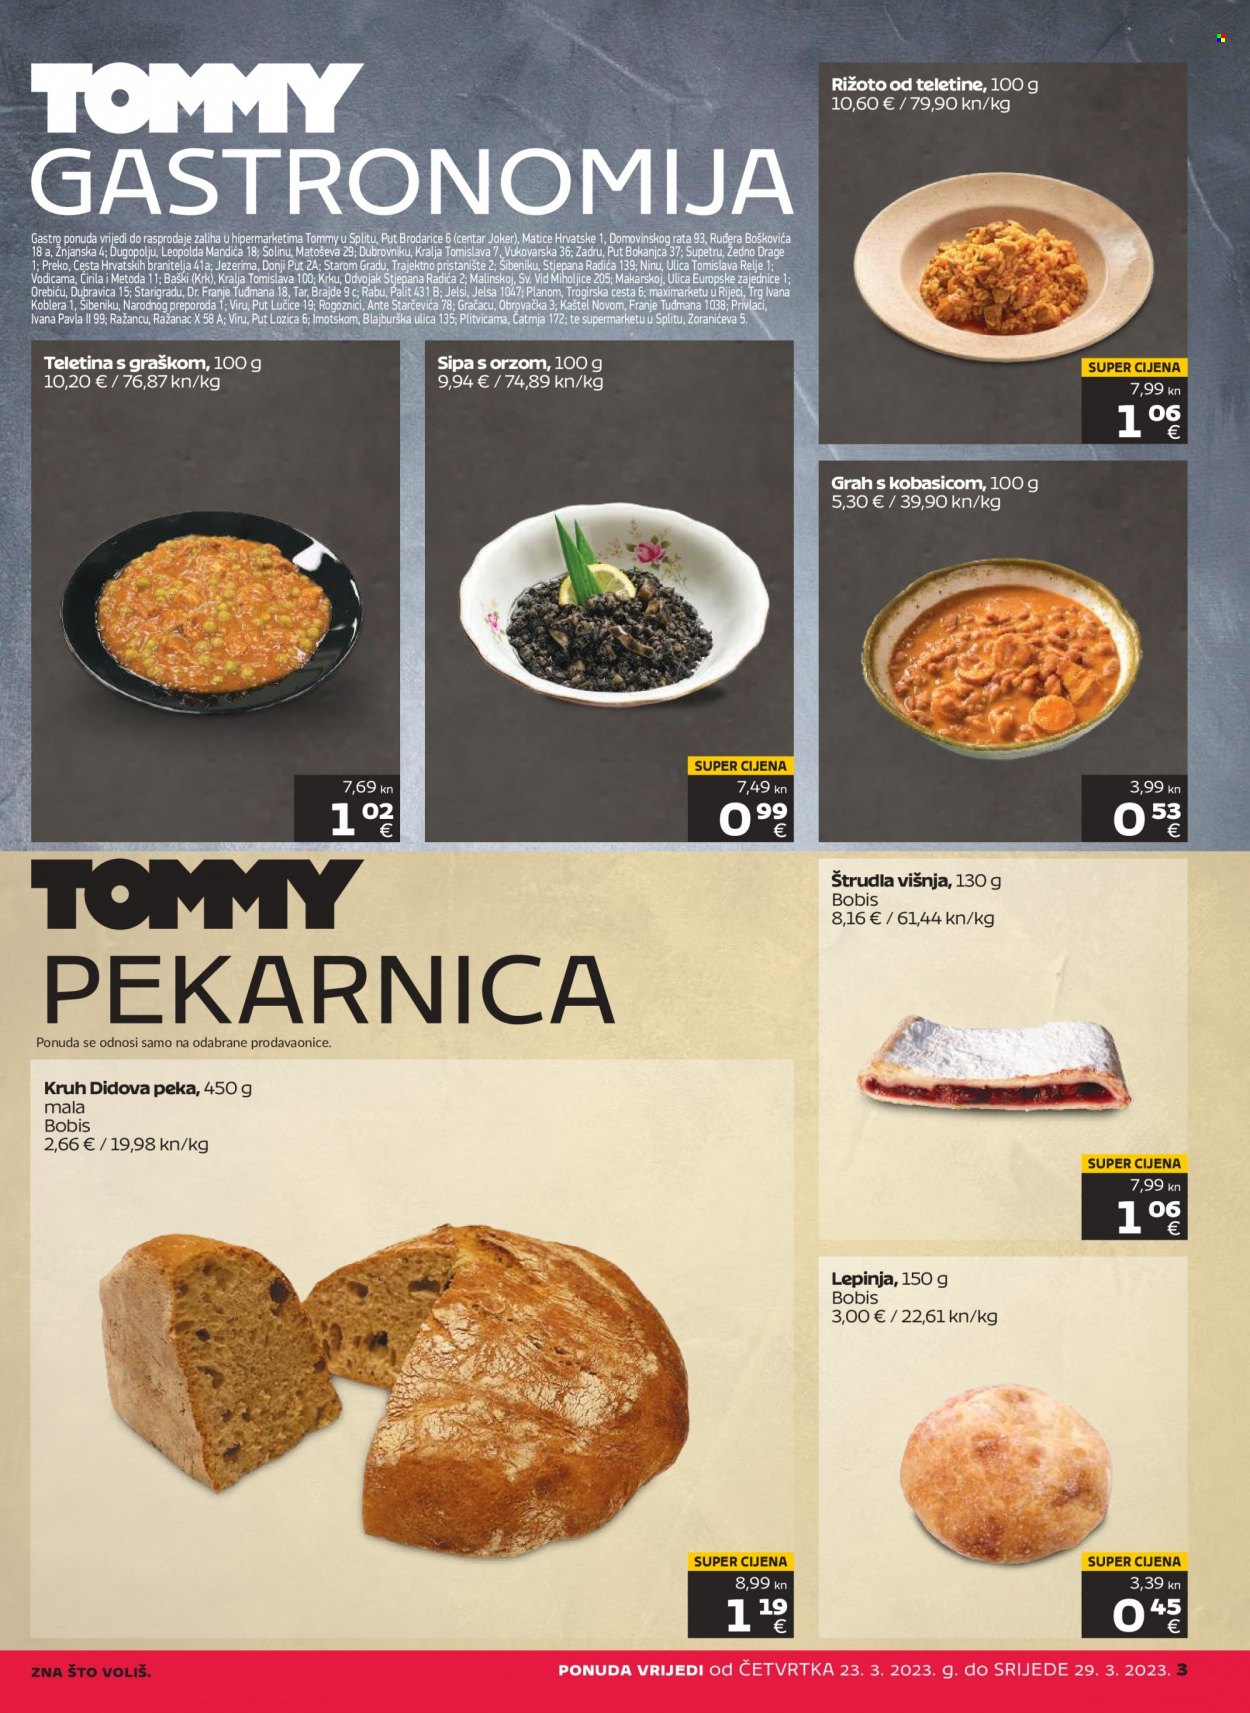 thumbnail - Tommy katalog - 23.03.2023. - 29.03.2023. - Sniženi proizvodi - gotovo jelo, grah s kobasicom, pecivo, savijača, kruh, slano pecivo, lepinje. Stranica 3.